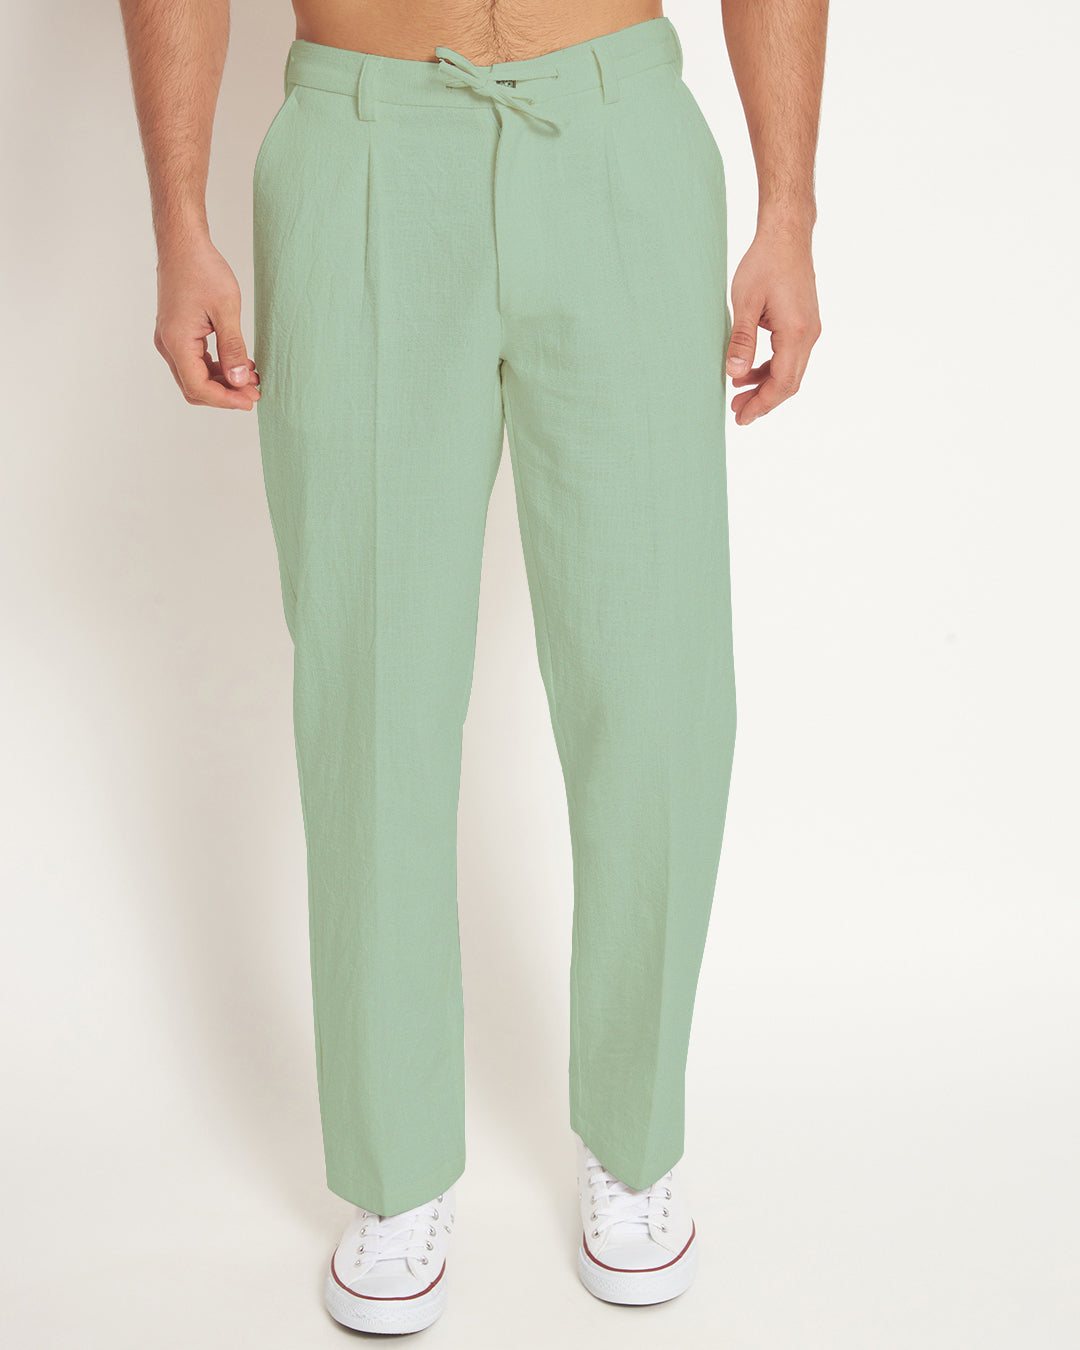 Combo: Casual Ease Beige & Spring Green Men's Pants - Set of 2